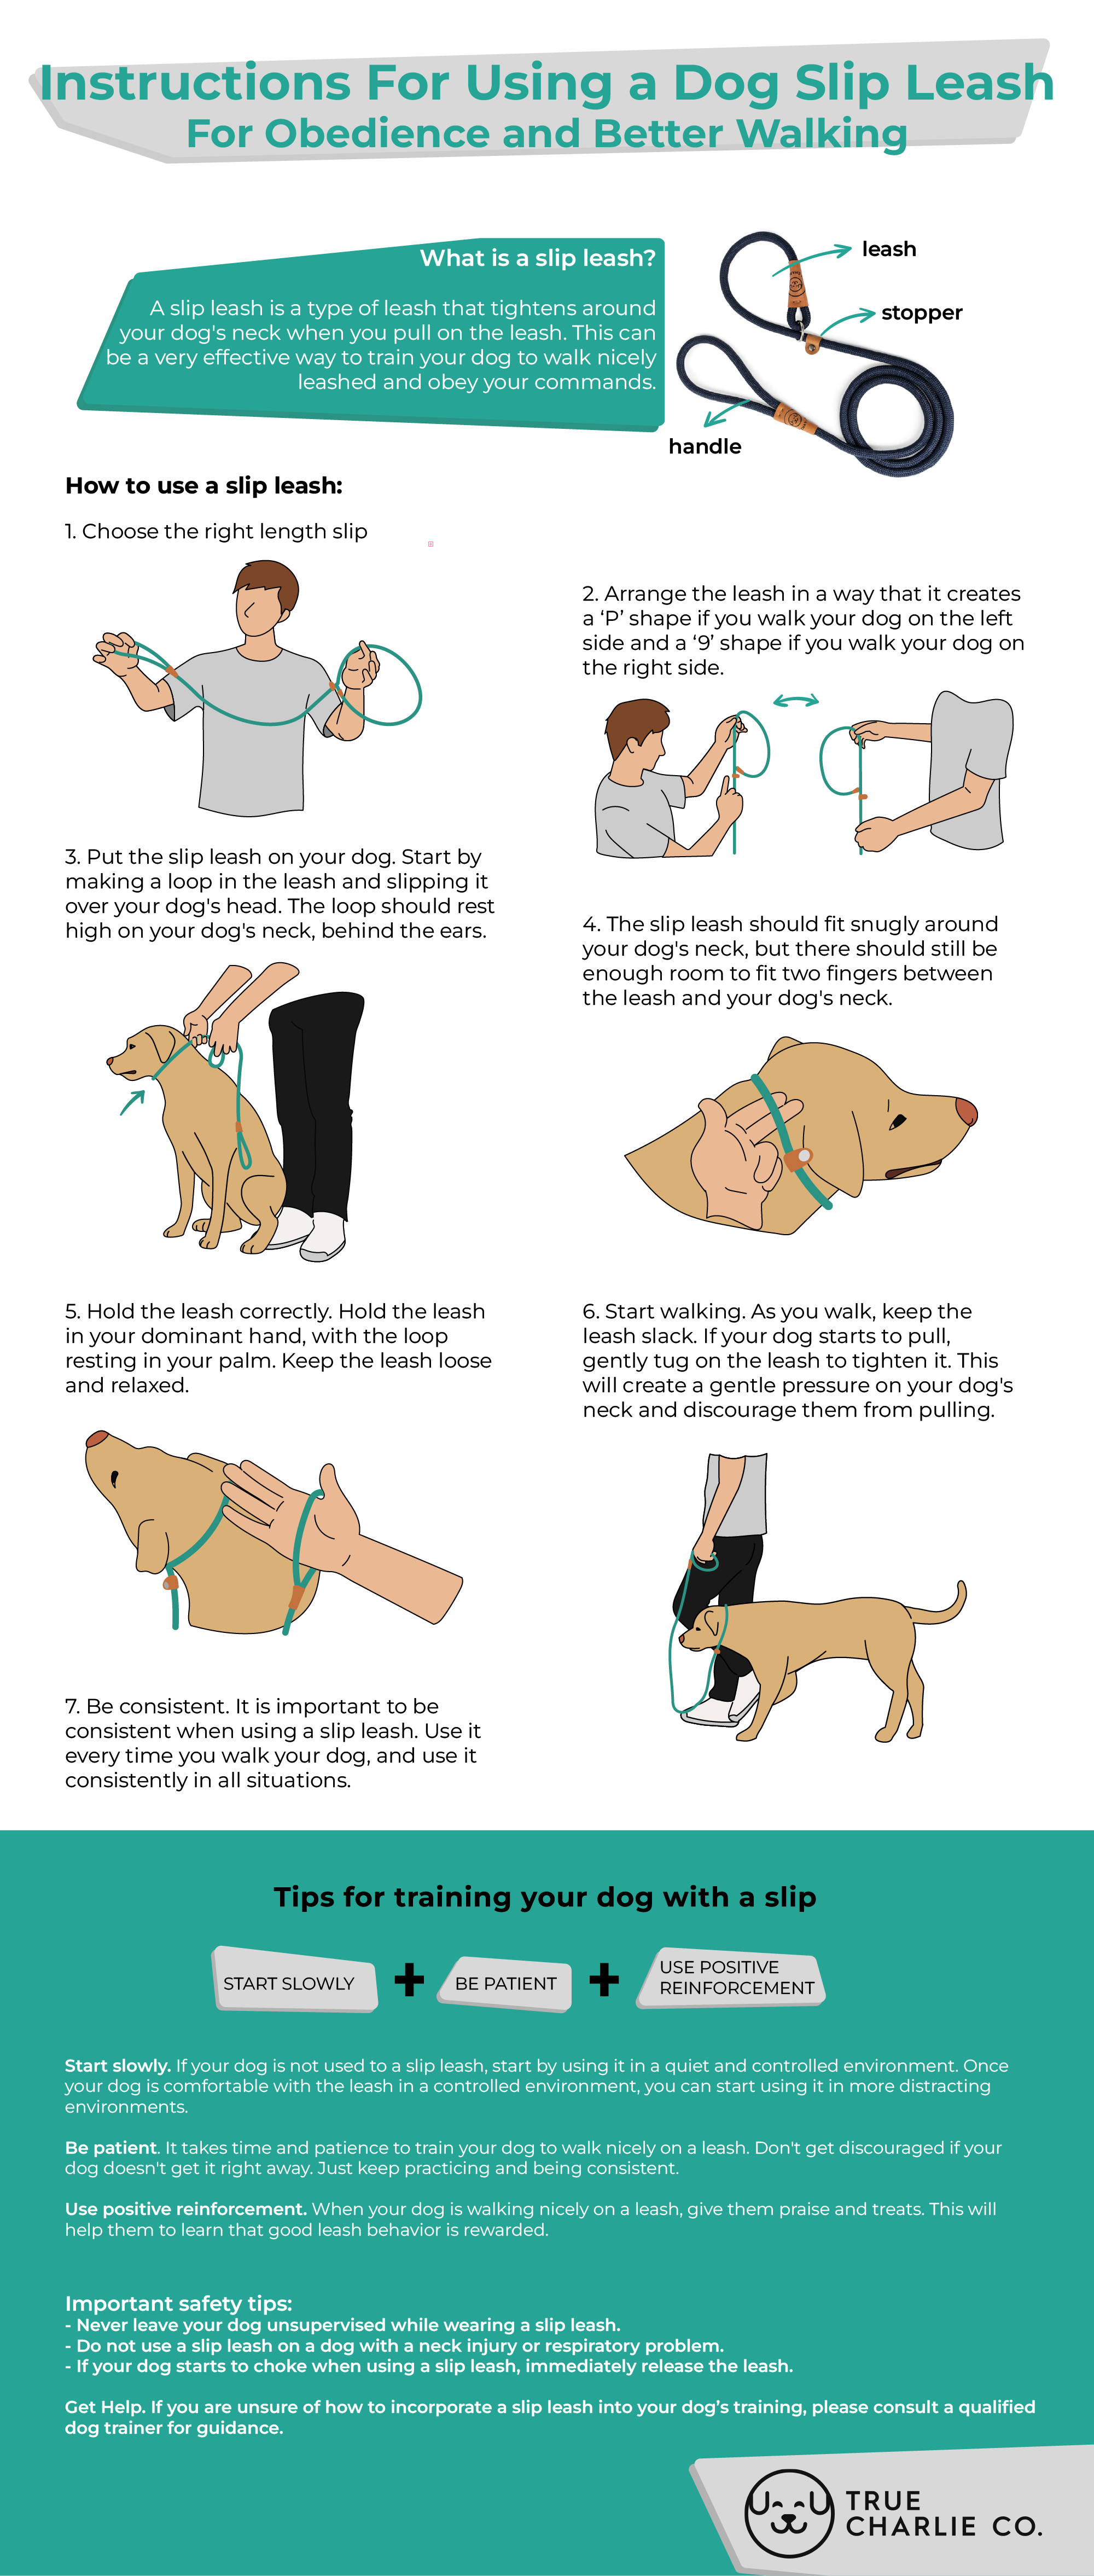 True Charlie Co. Dog Slip Leash Infographic